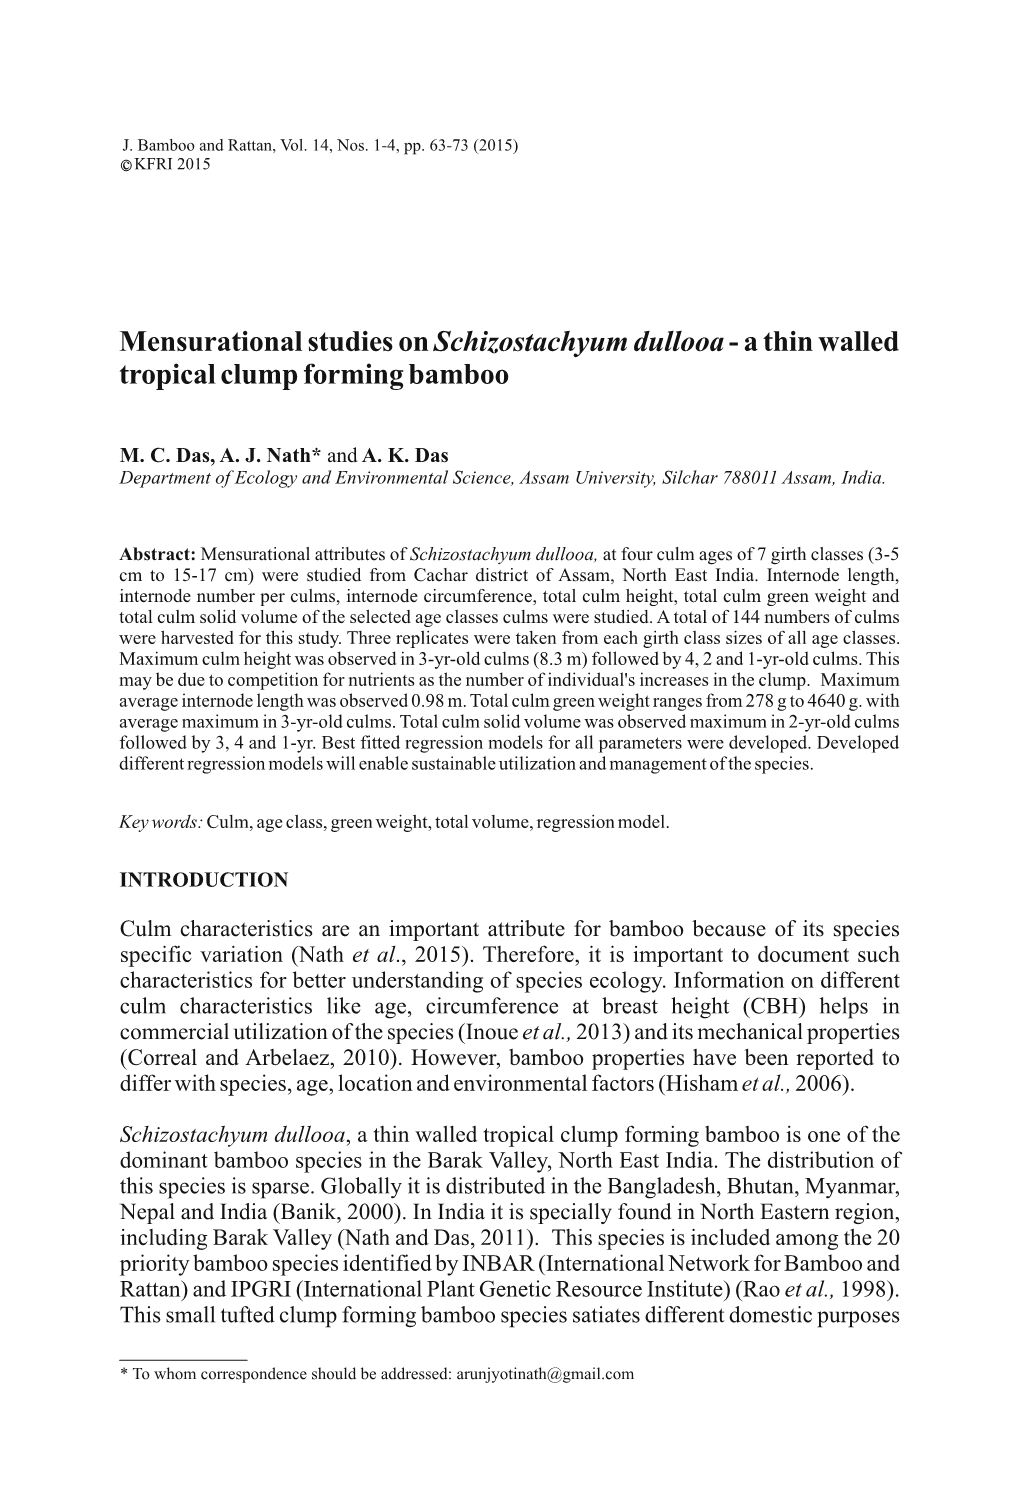 Mensurational Studies on Schizostachyum Dullooa - a Thin Walled Tropical Clump Forming Bamboo